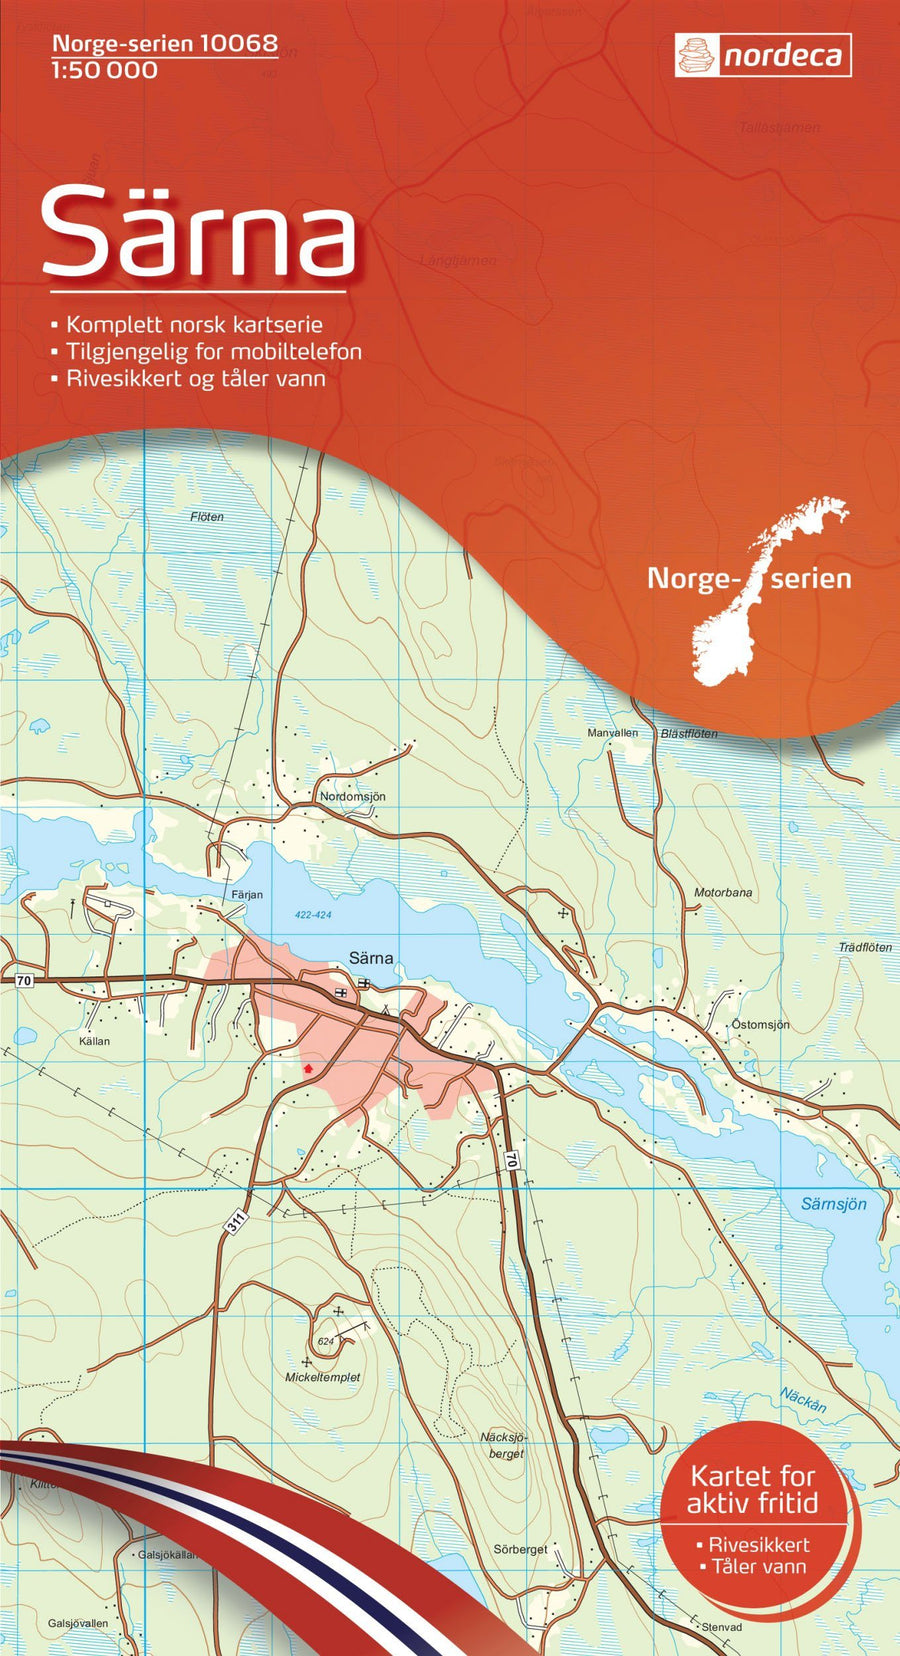 Carte de randonnée n° 10068 - Sarna (Norvège) | Nordeca - Norge-serien carte pliée Nordeca 